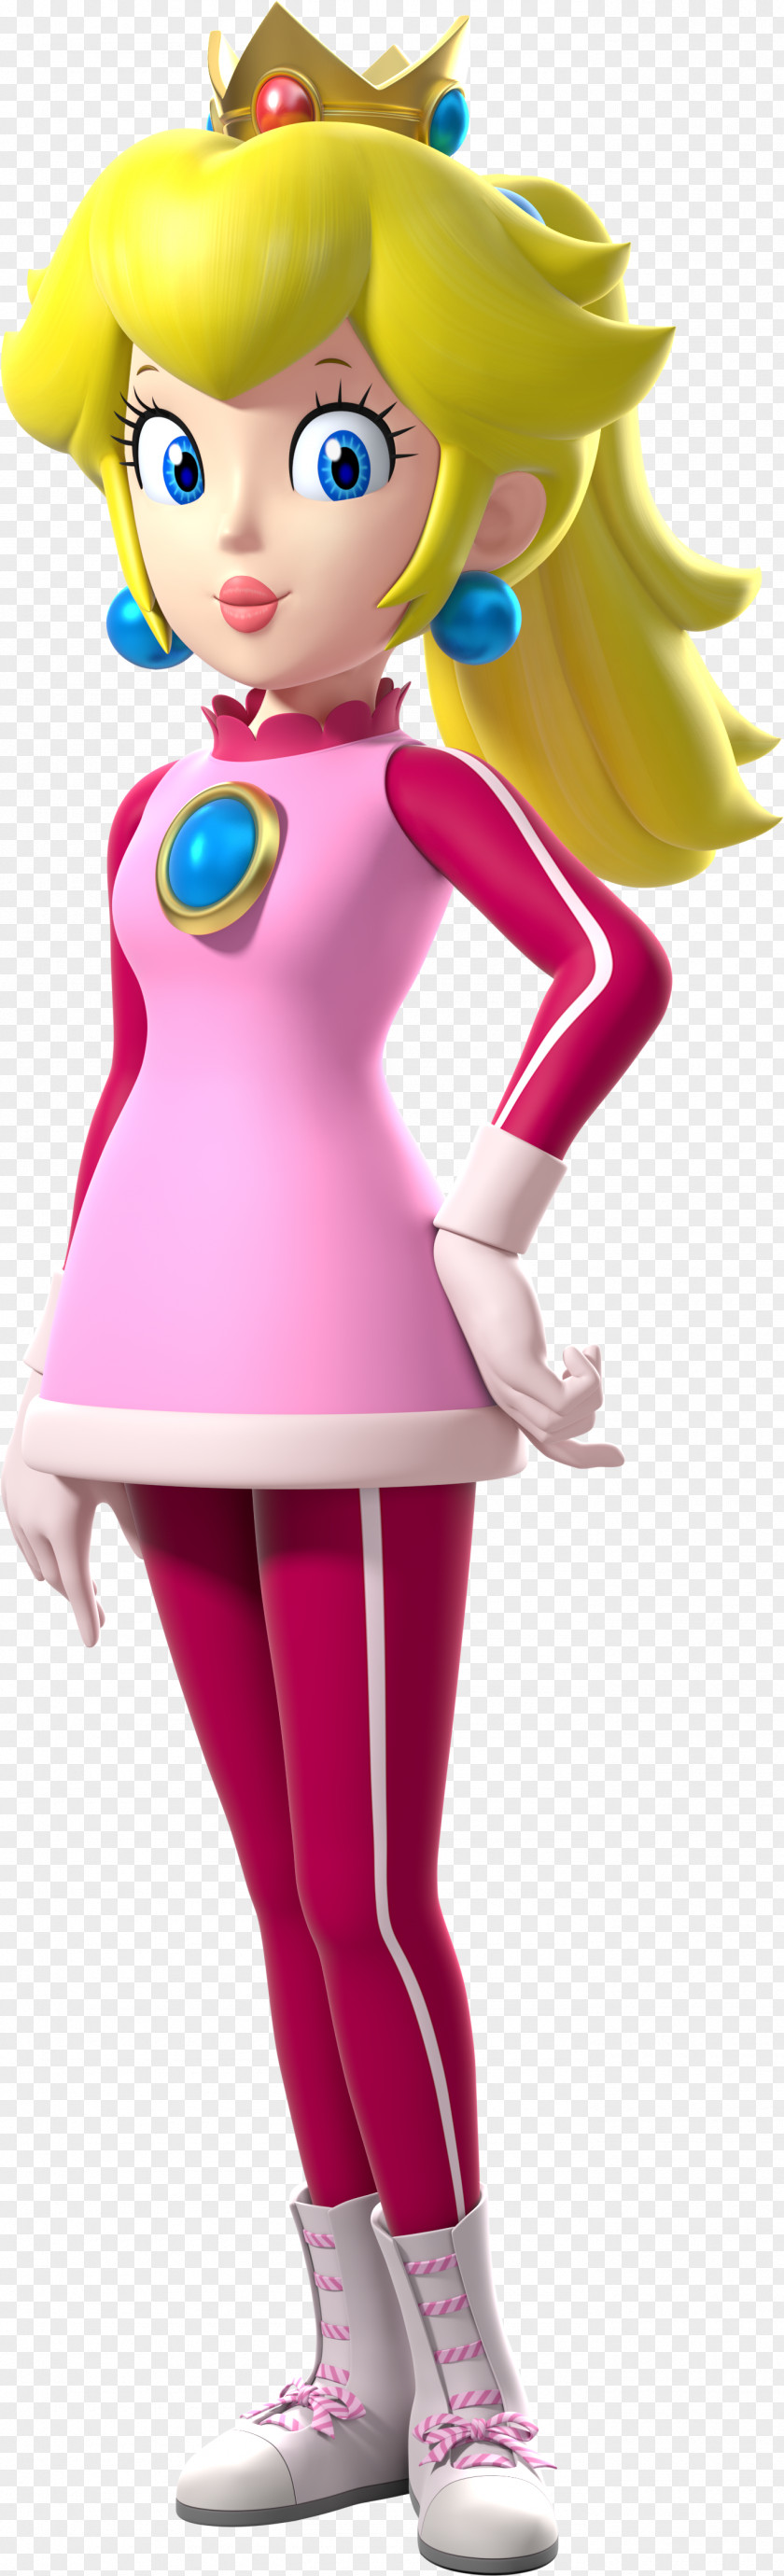 Princess Peach Clip Art Illustration Pink M Figurine Mascot PNG